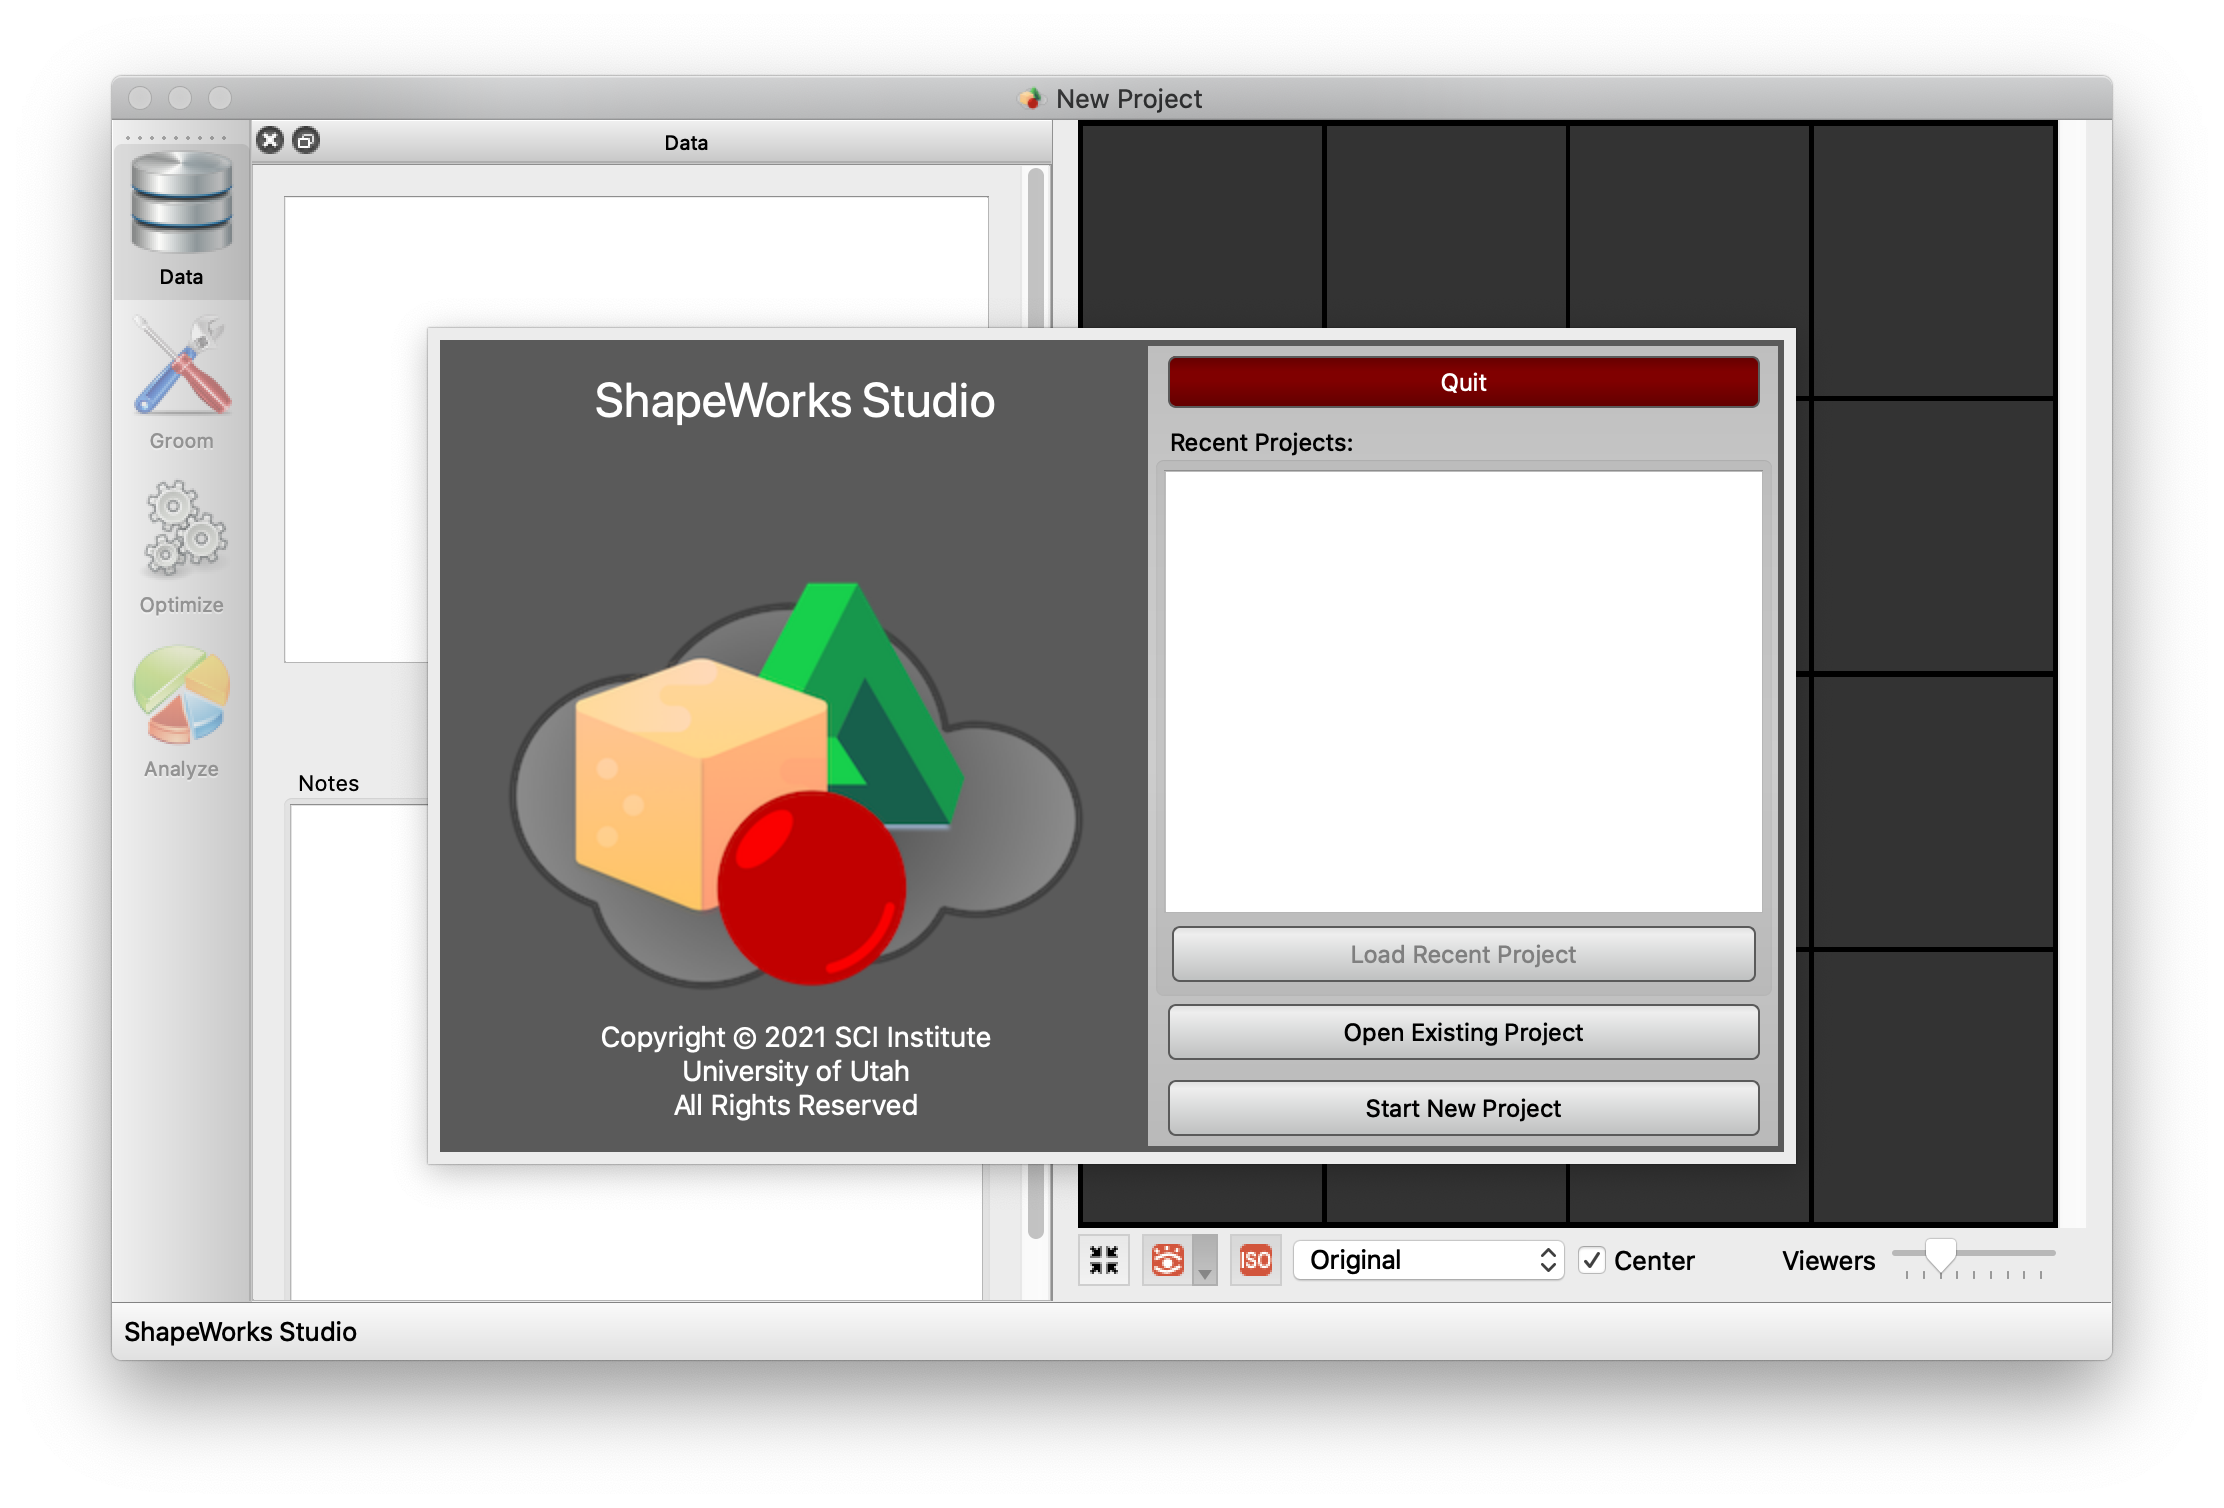 ShapeWorks Studio Interface with Splash Screen